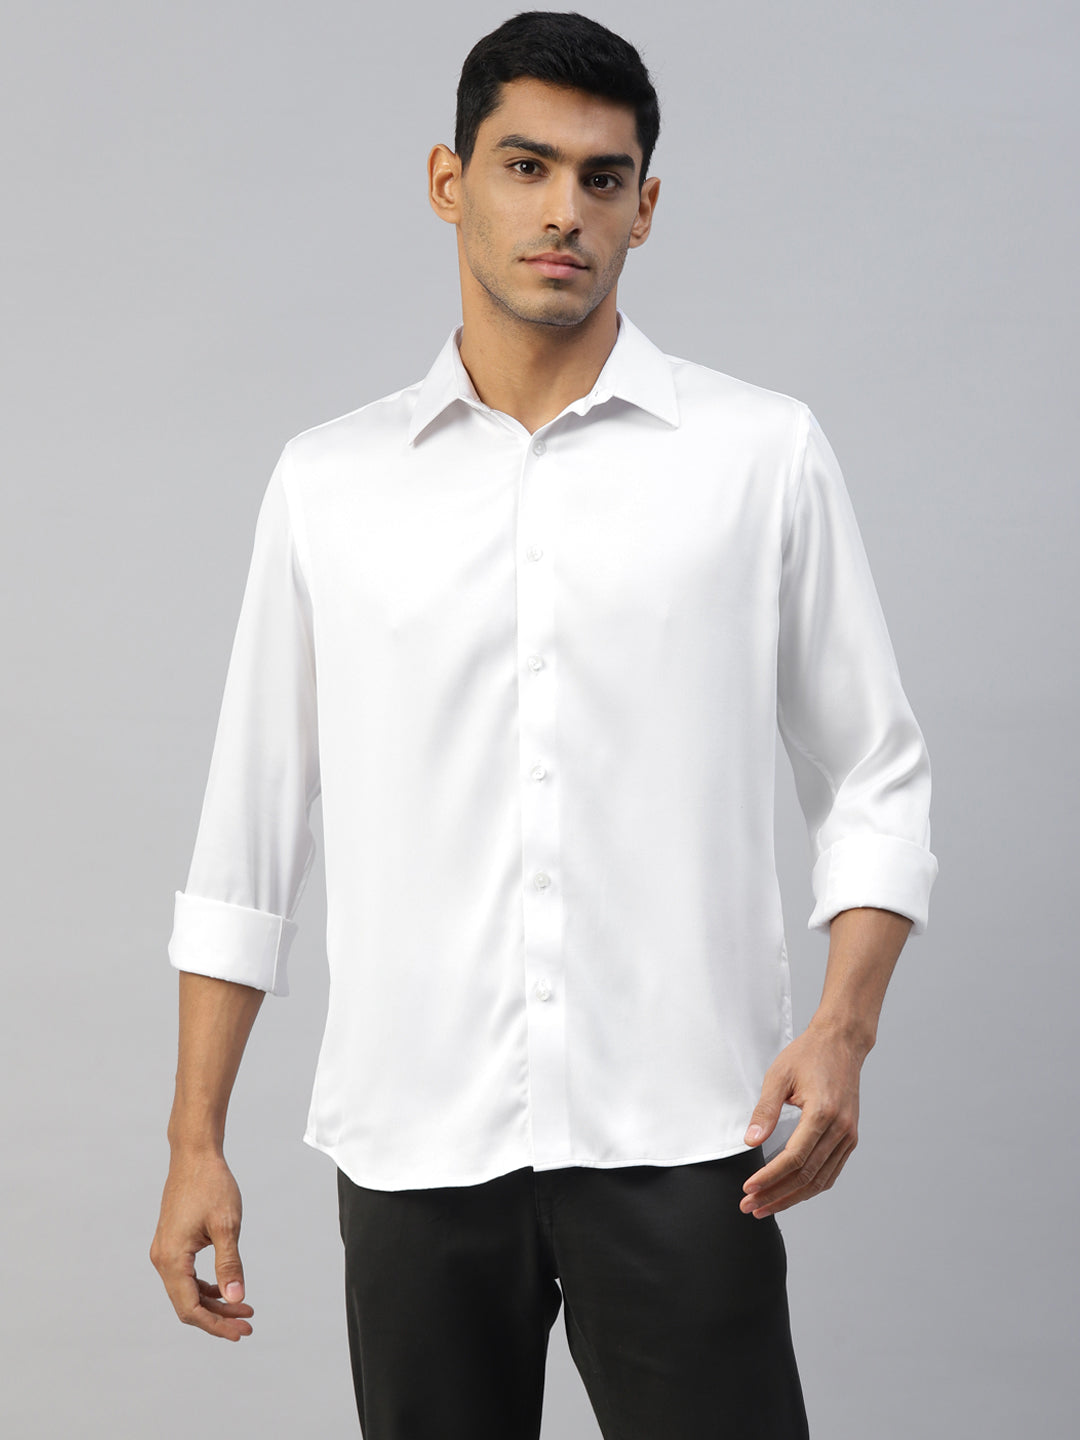 Don Vino Men's Classic White Party Shirt